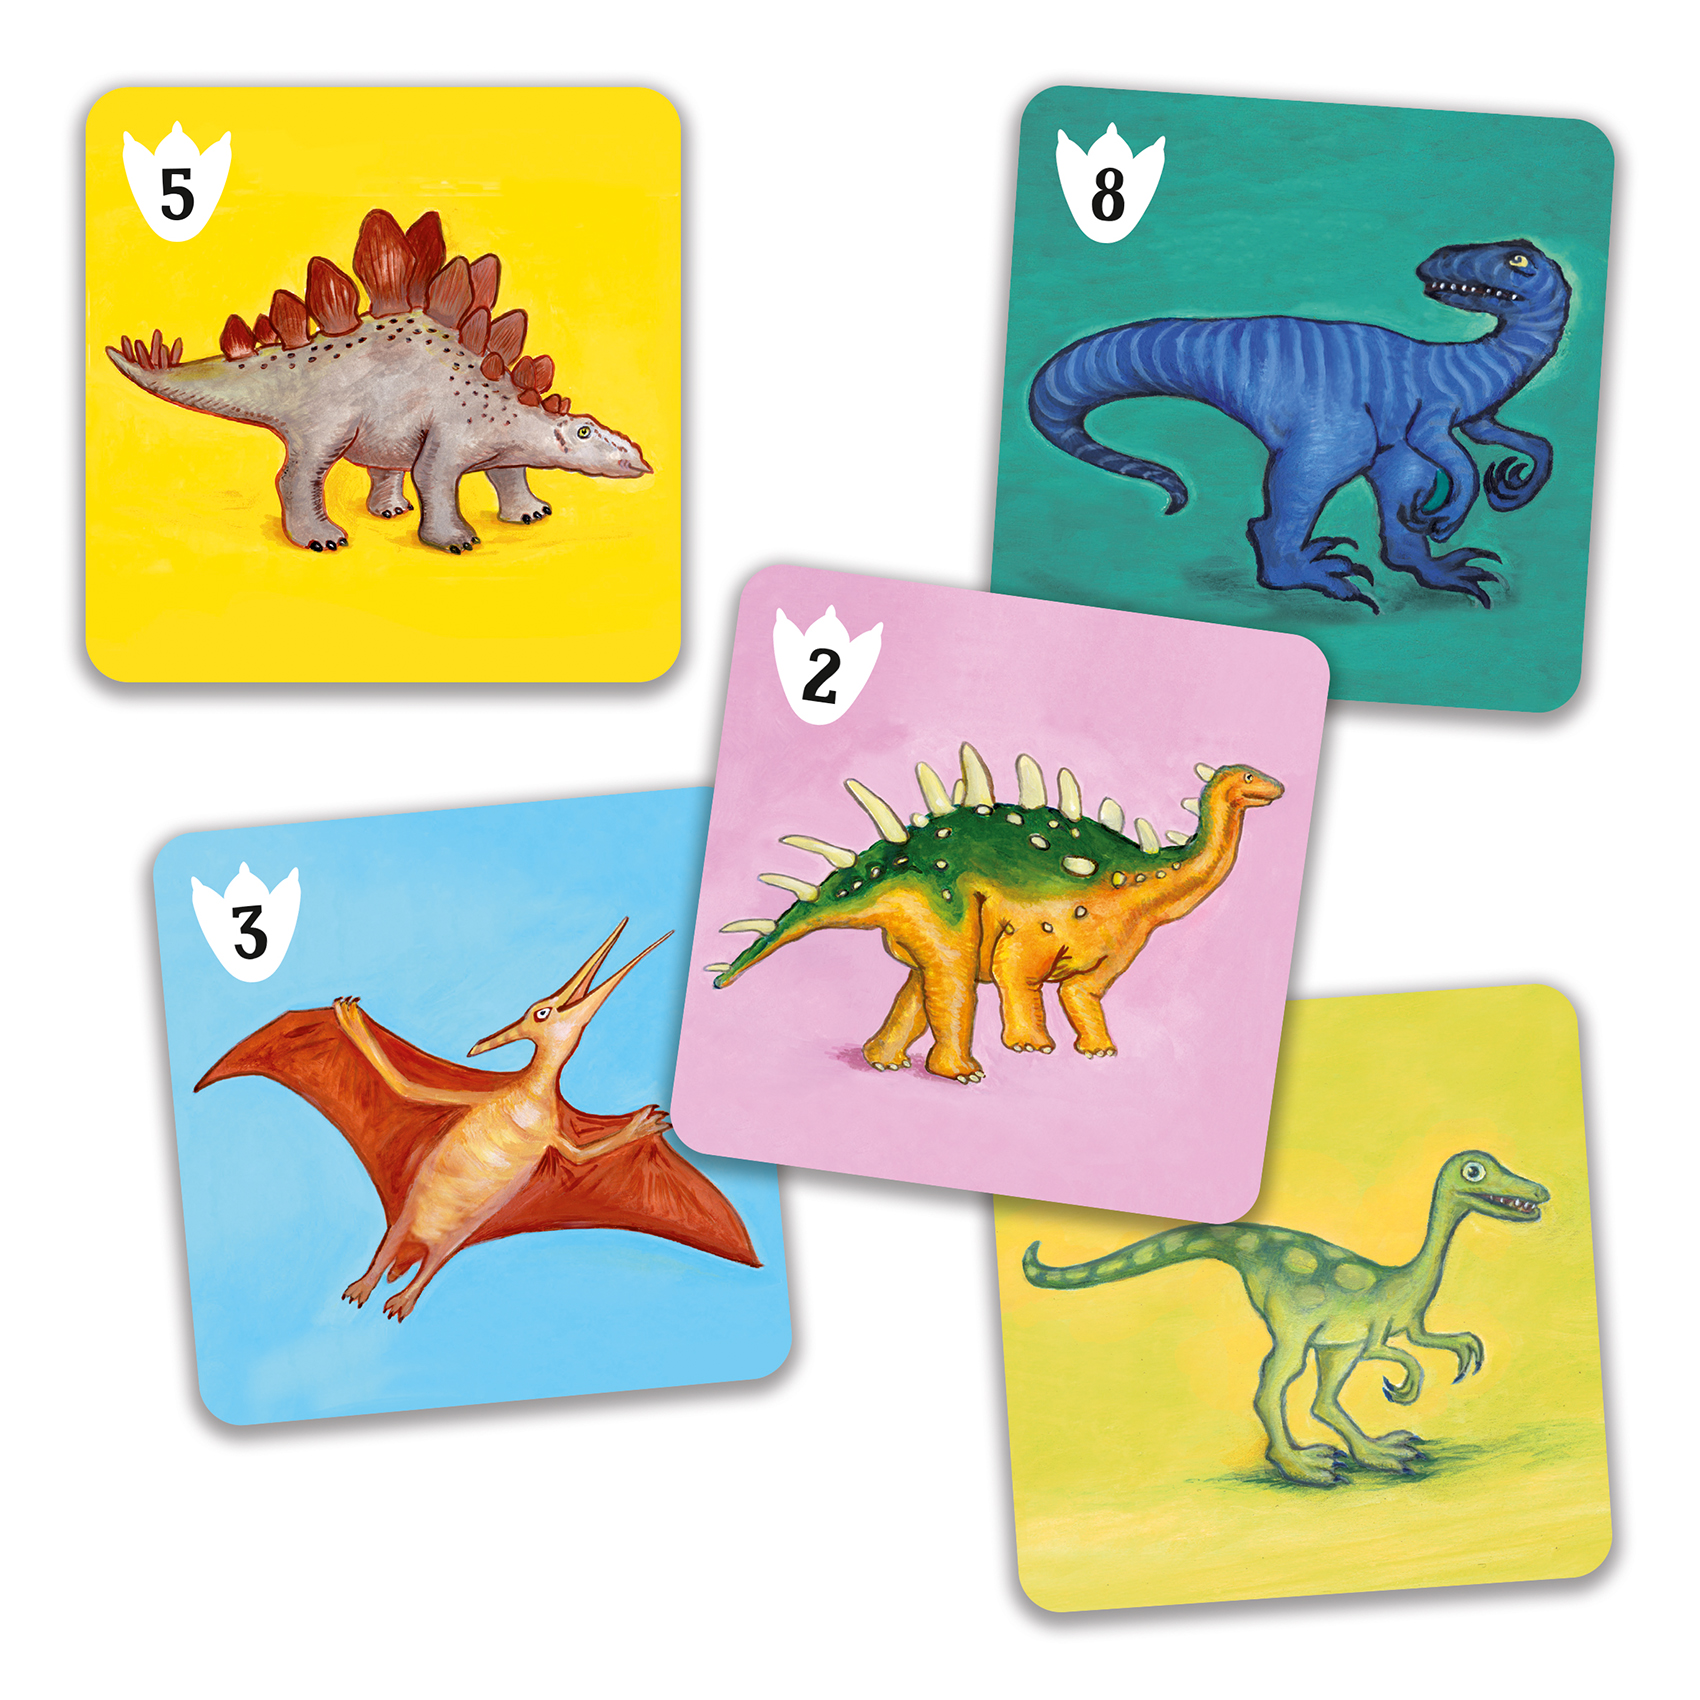 batasaurus card game